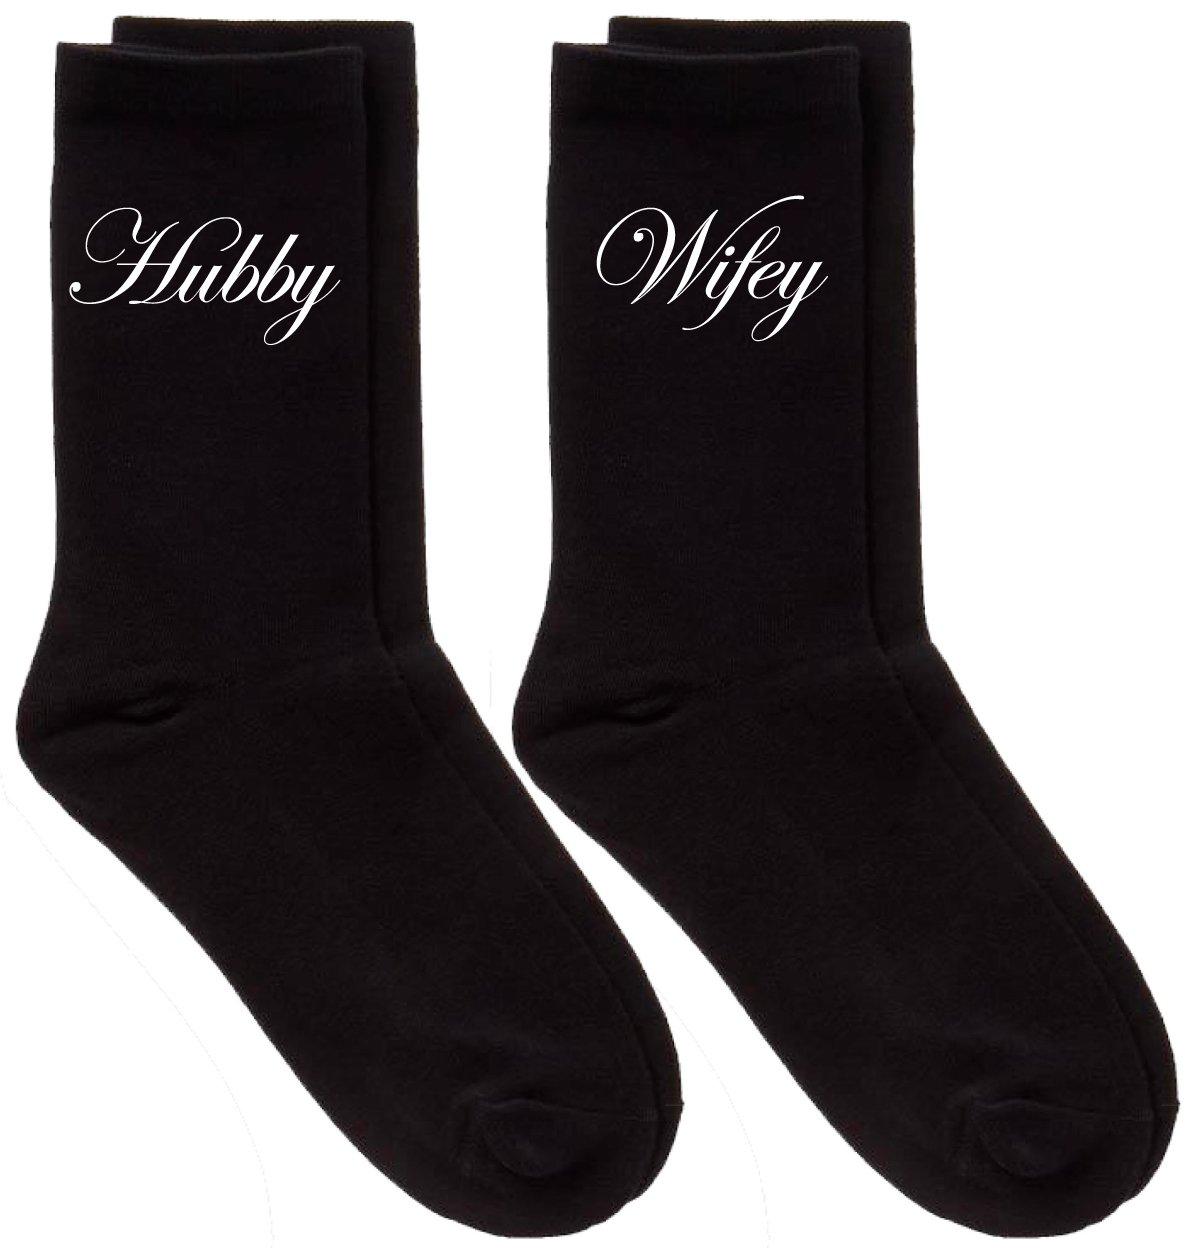 Couples Hubby / Wifey Black Calf Sock Set